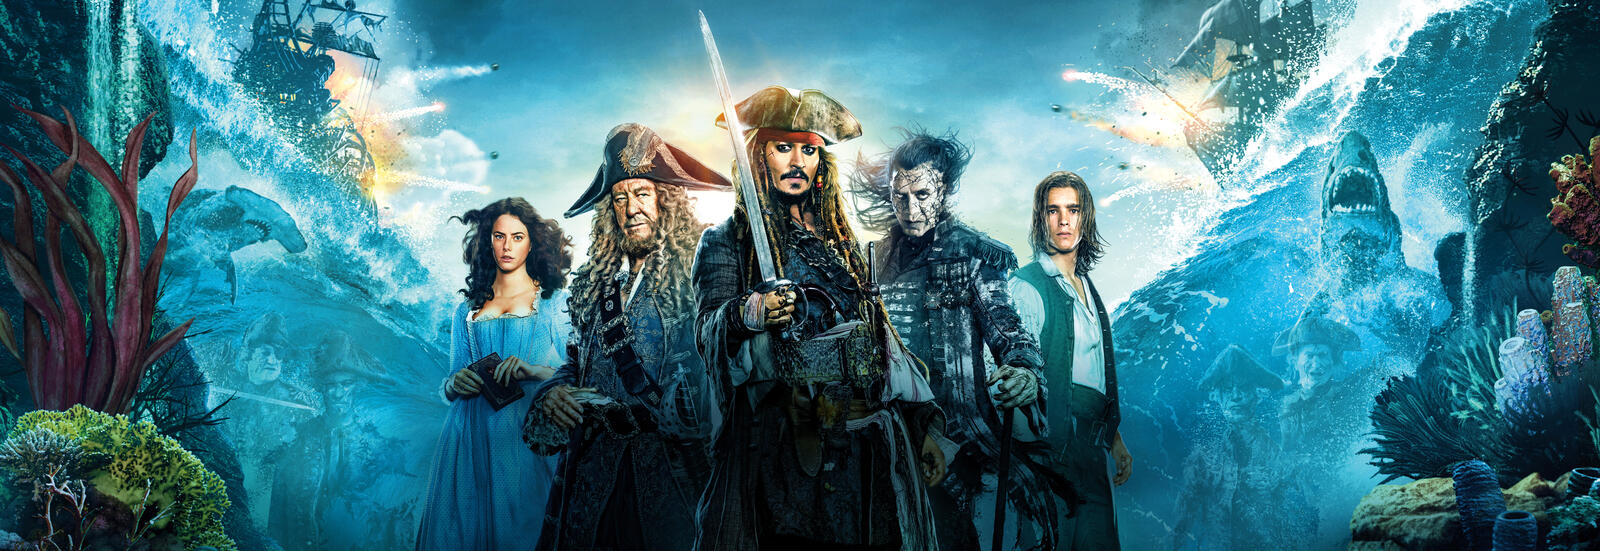 Обои Pirates of the Caribbean: Dead men tell no tales фильм боевик на рабочий стол